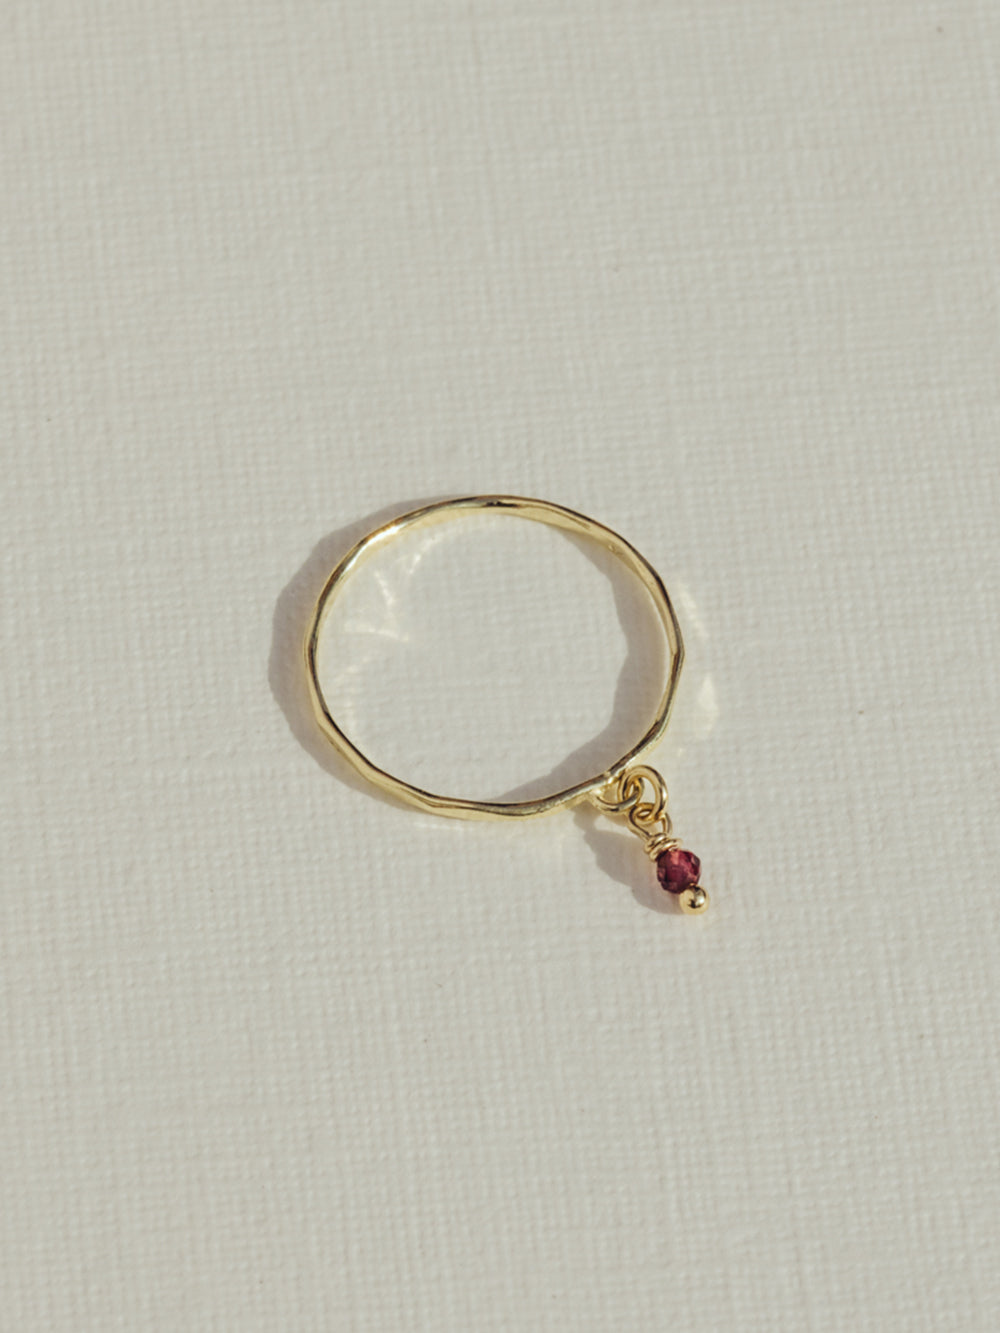 Birthstone ring January - Red garnet | 14K Gold Plated